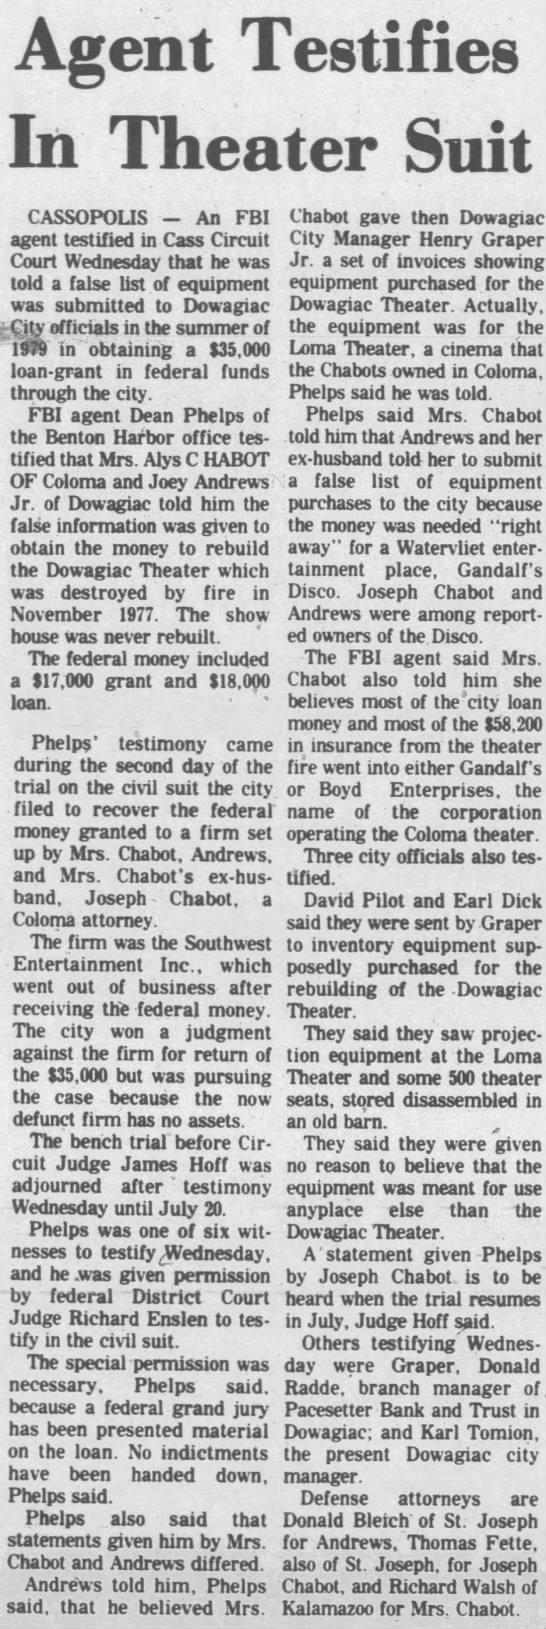 Dowagiac Theatre - June 18 1981